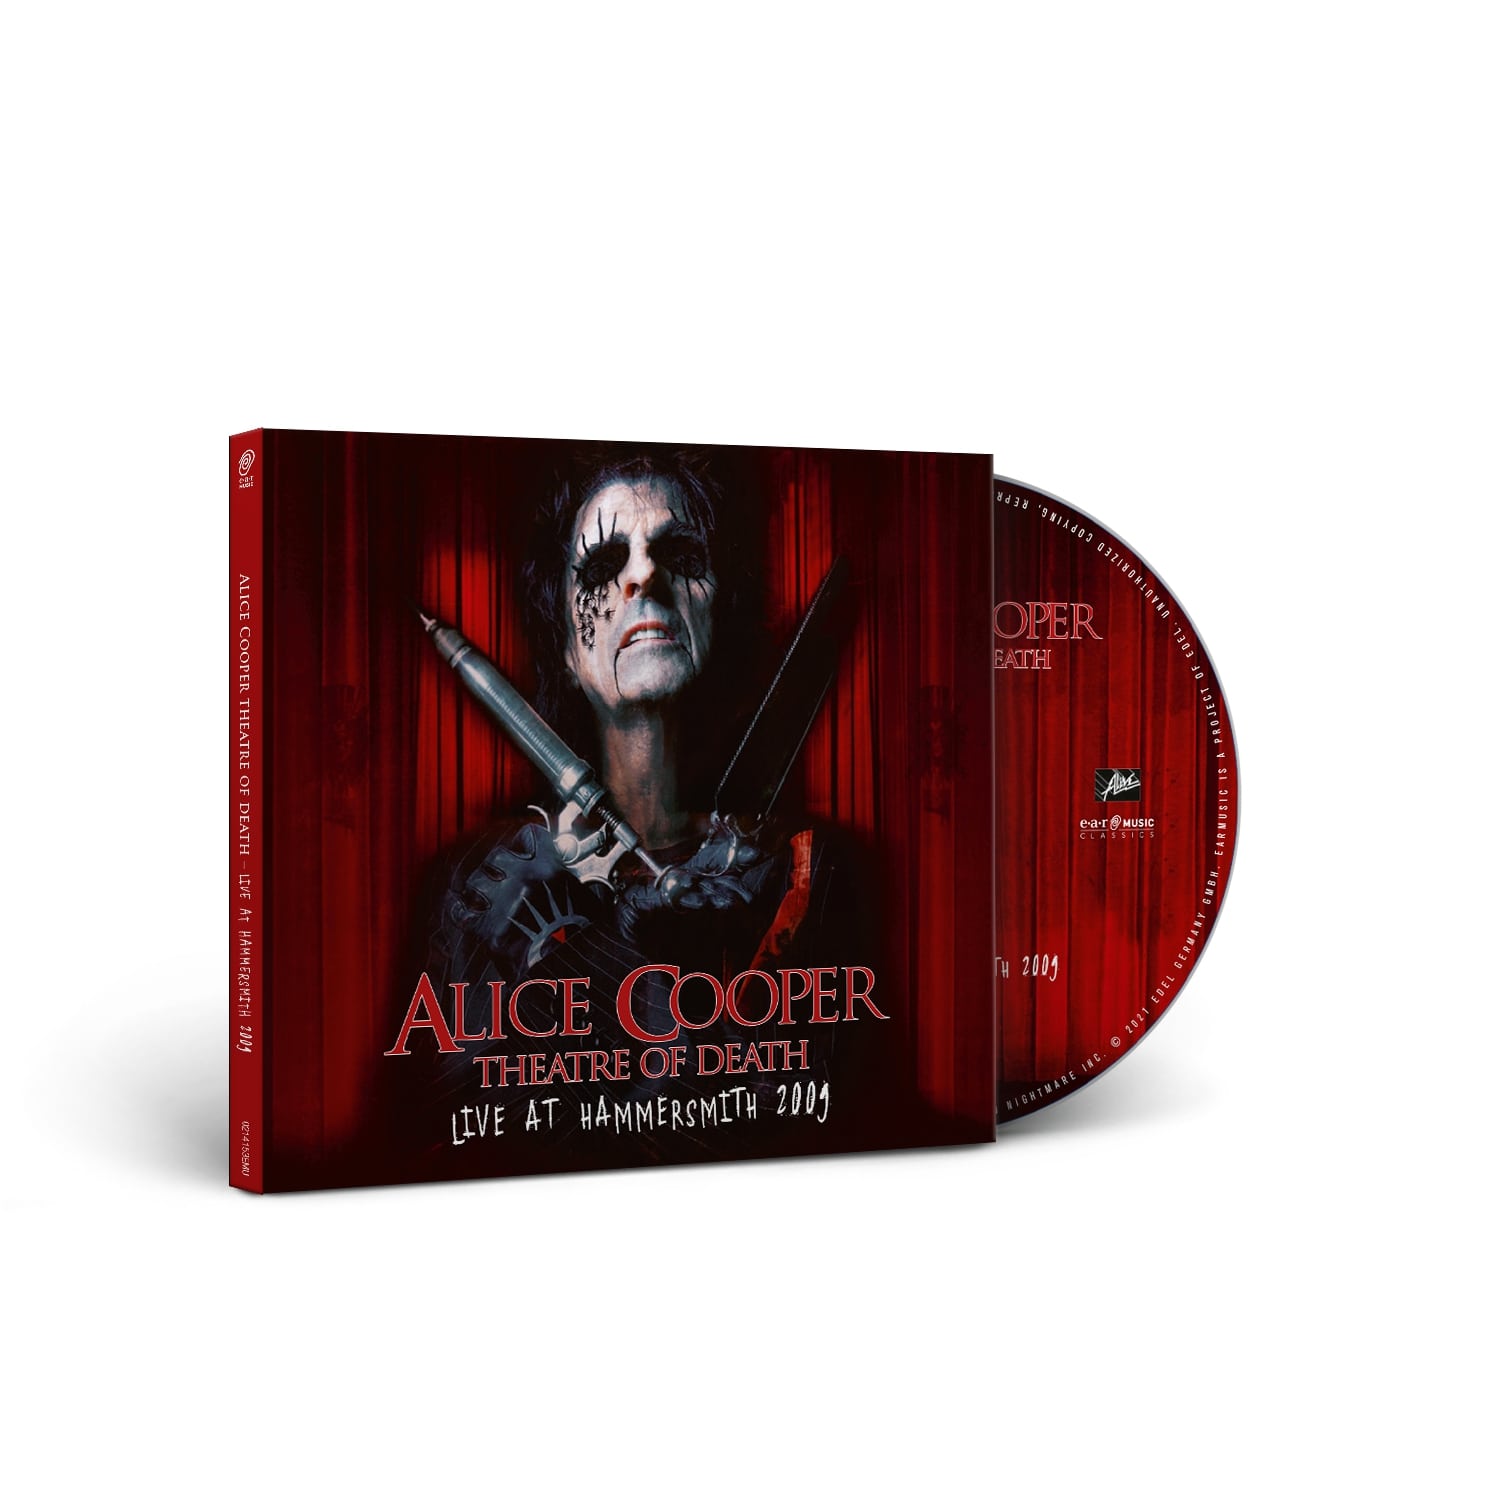 Alice Cooper - Theatre Of Death - Live At Hammersmith 2009 Digipak) CD